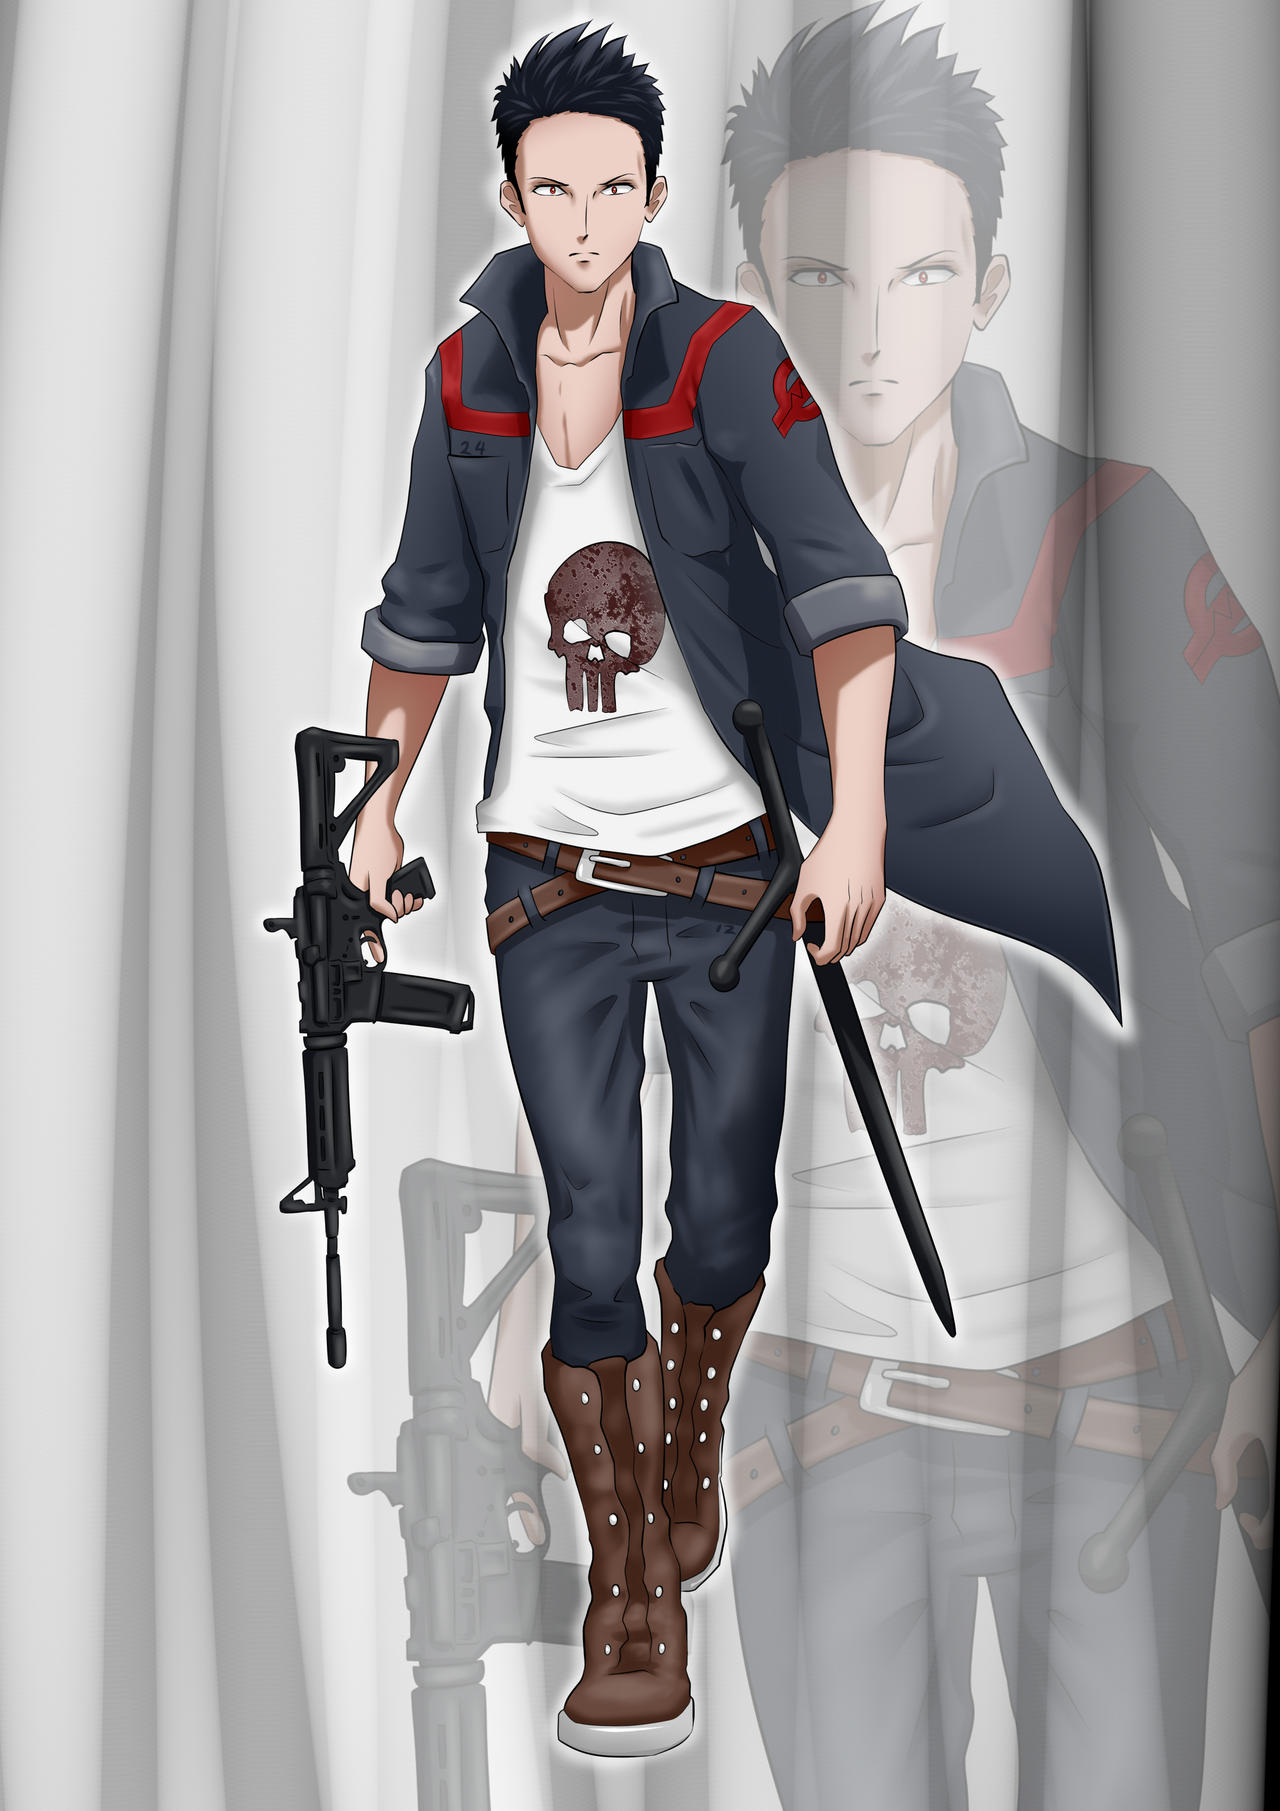 JOEY - anime boy - anime soldier by Allydity2412 on DeviantArt